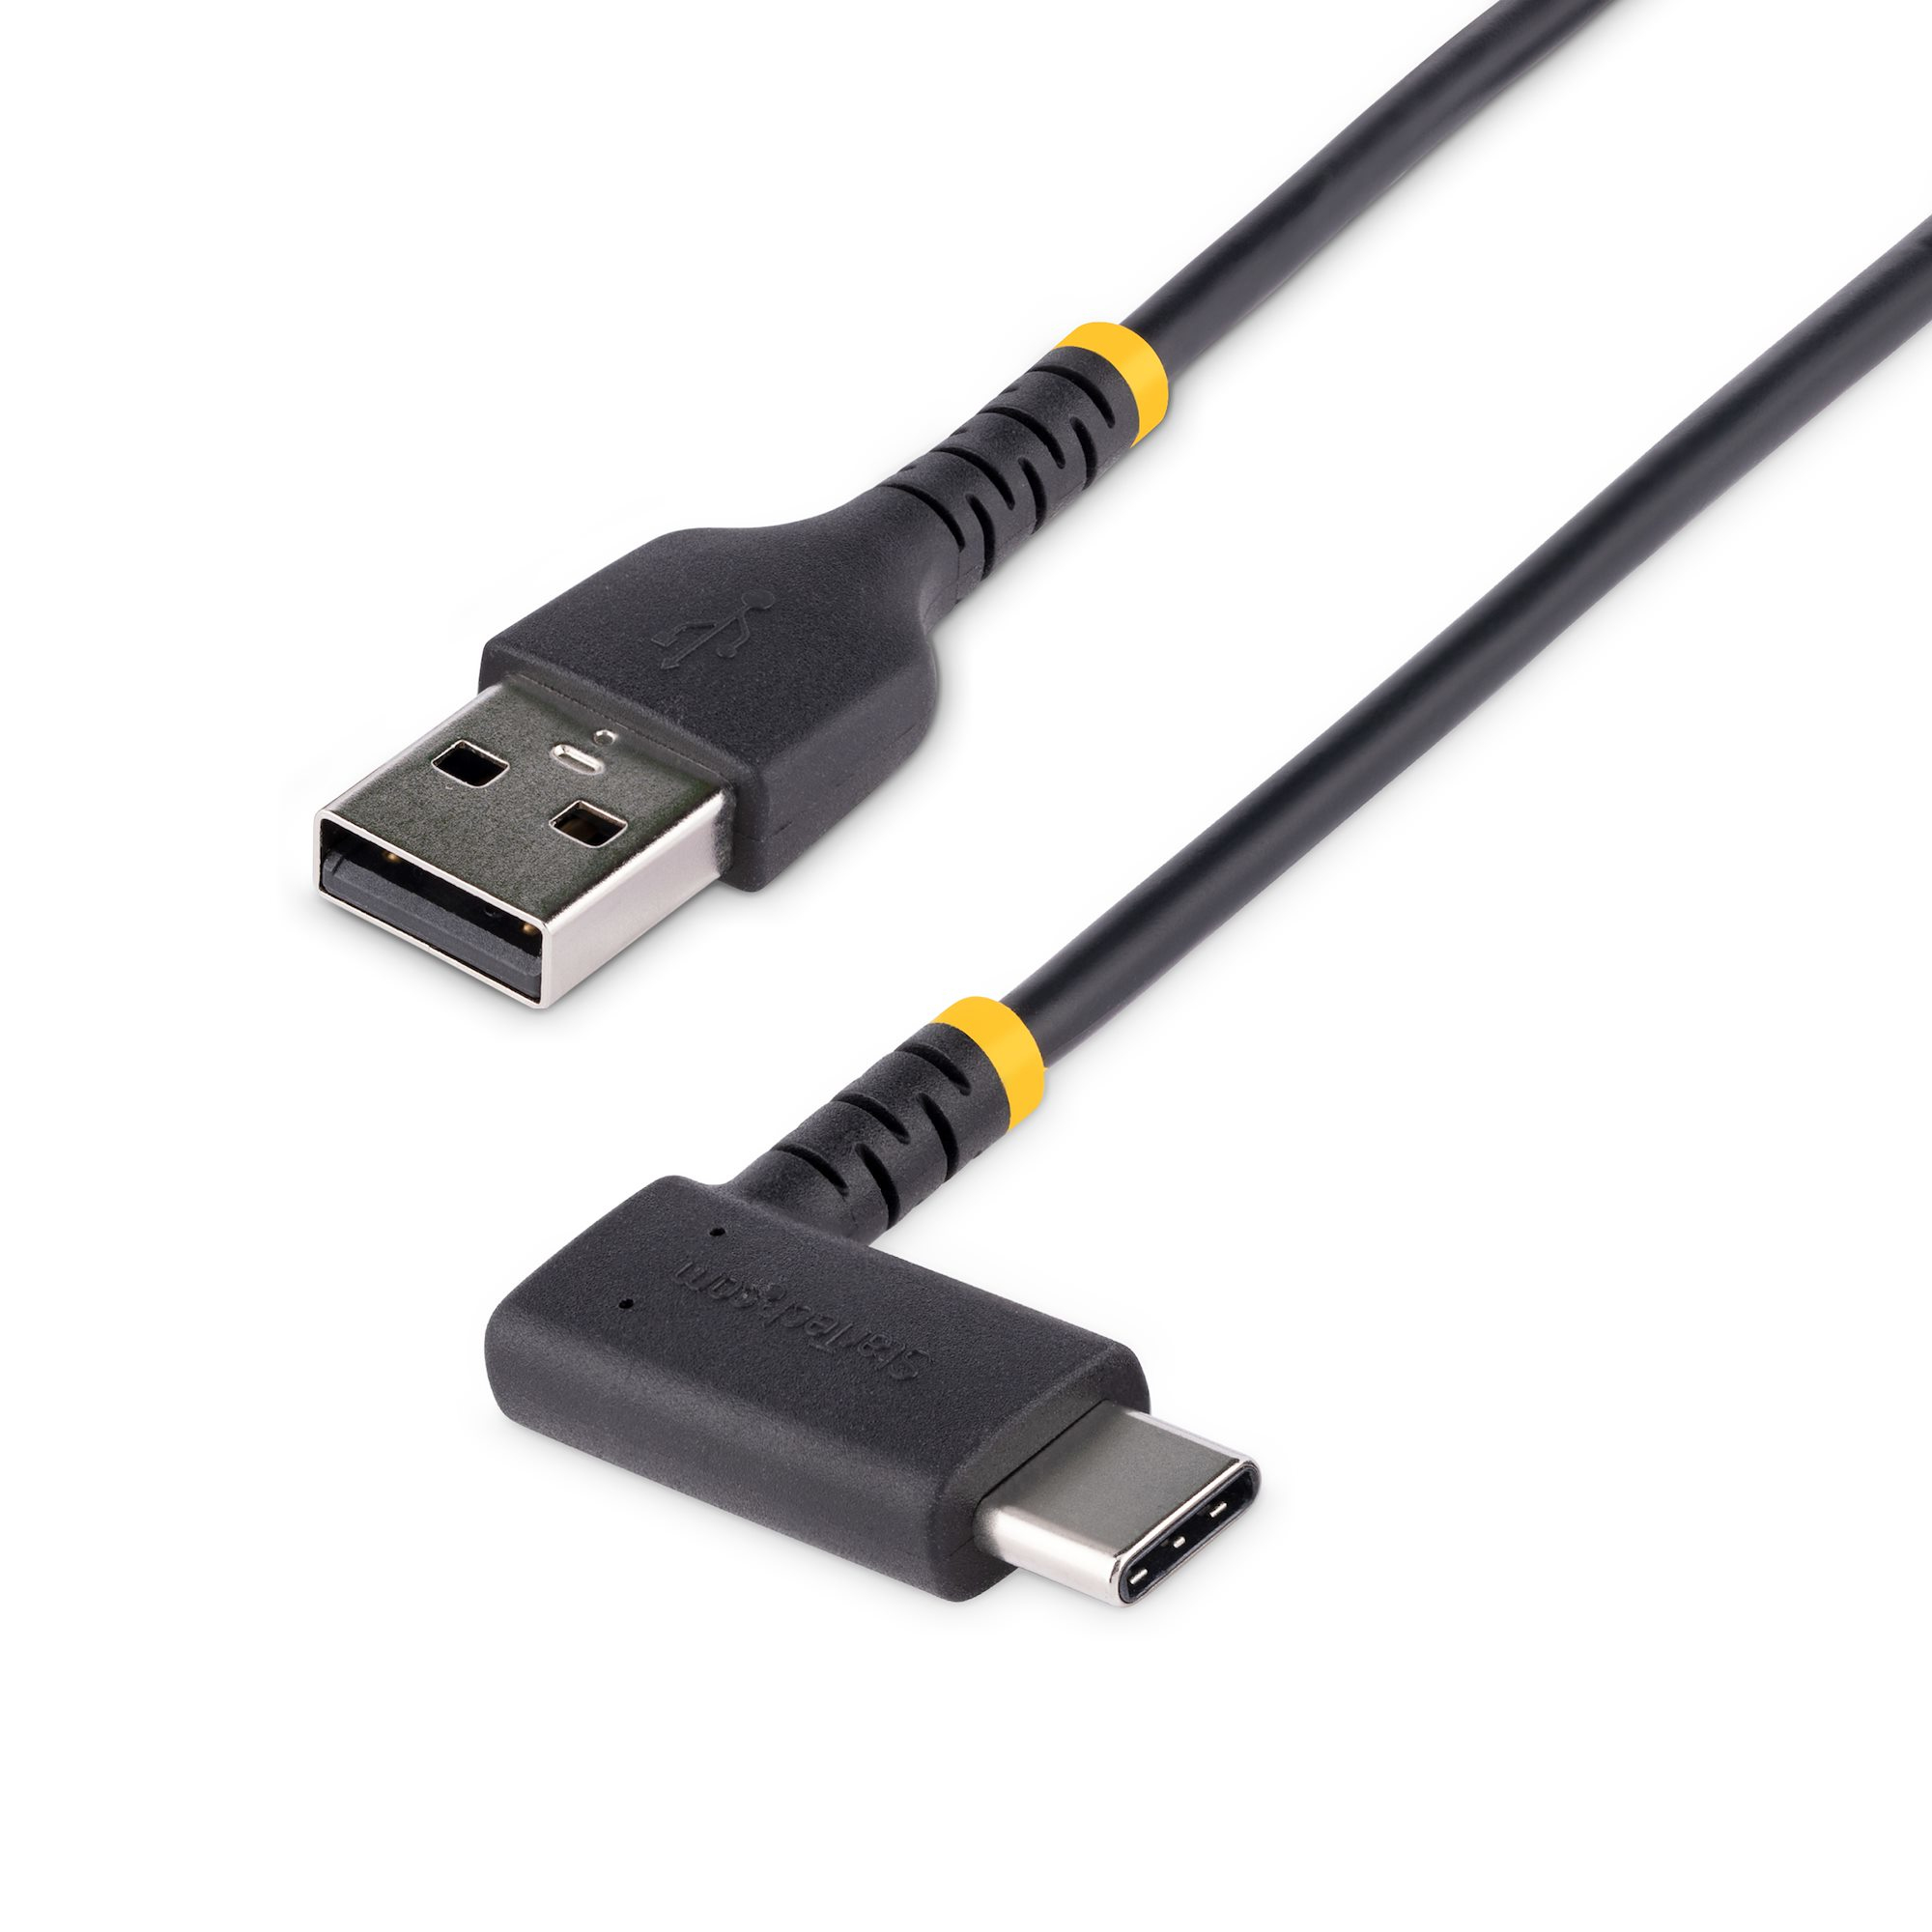 1m USB A naar C Oplaadkabel, Haakse USB-C Kabel, Robuuste Fast Charge USB-C Kabel, USB 2.0 A Type-C, 3A, USB Laadkabel met Aramide Vezel, Zwart (R2ACR-1M-USB-CABLE) kopen » Centralpoint